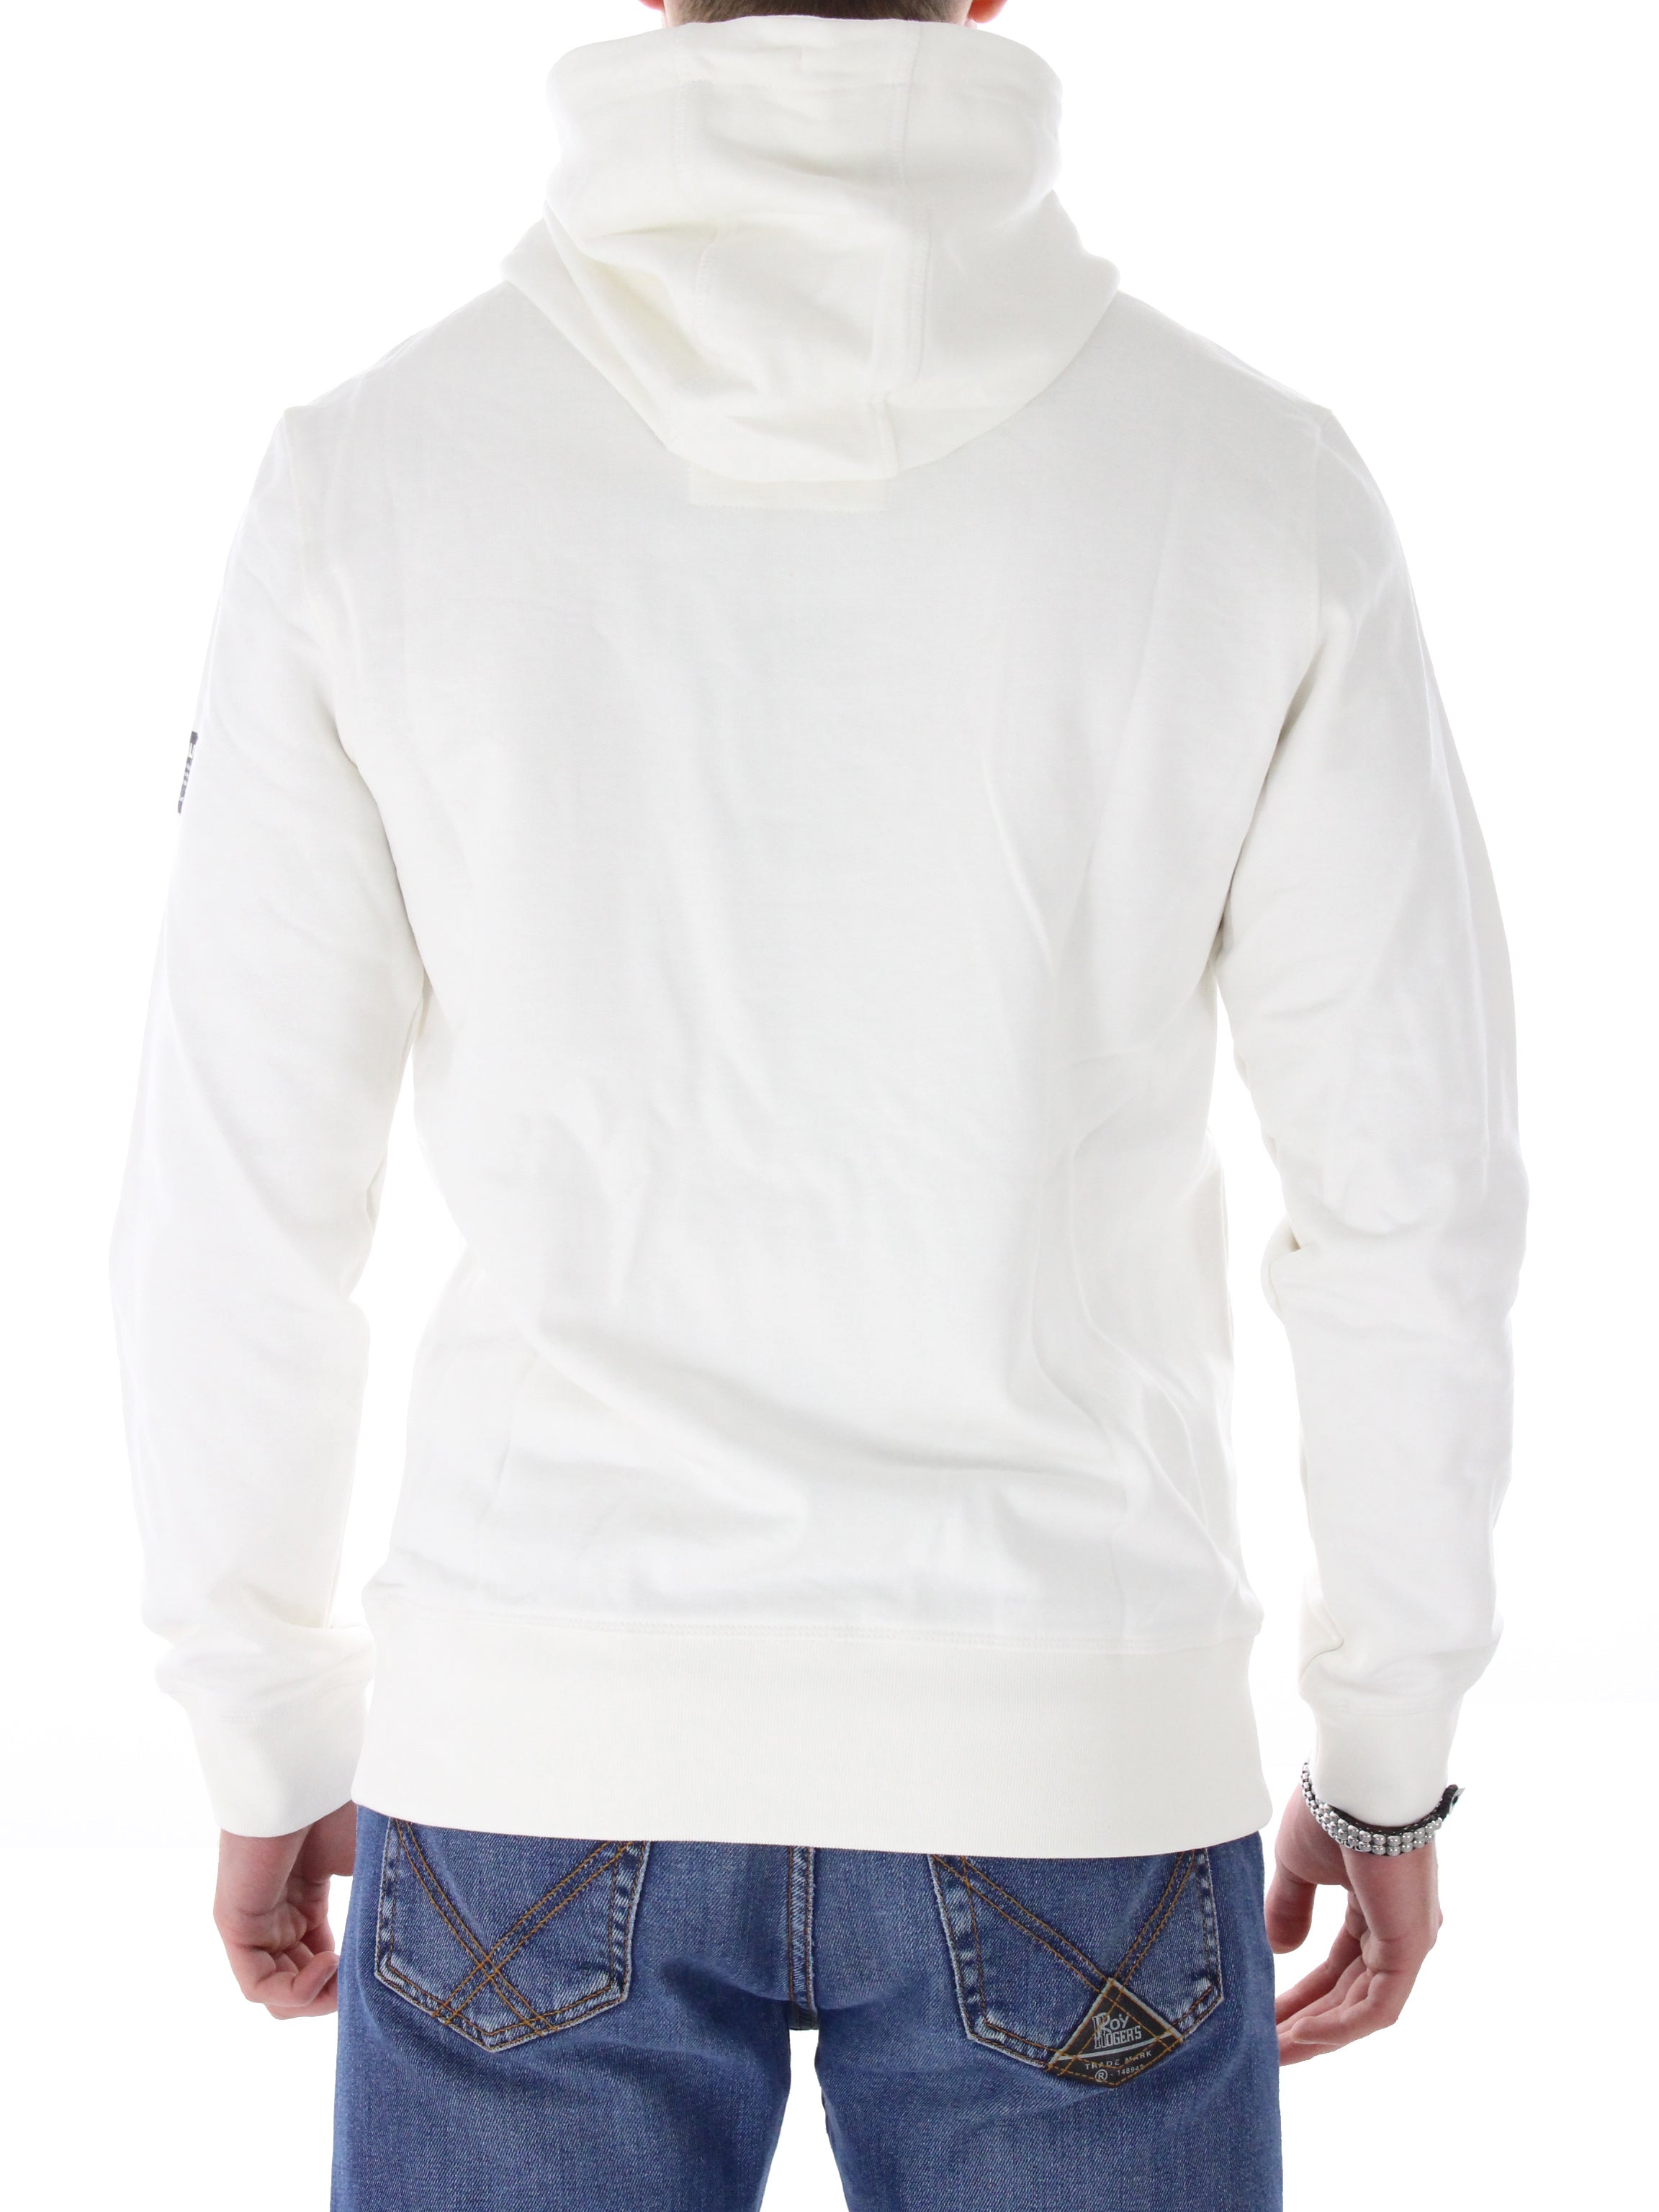 White Barcalf hooded sweatshirt